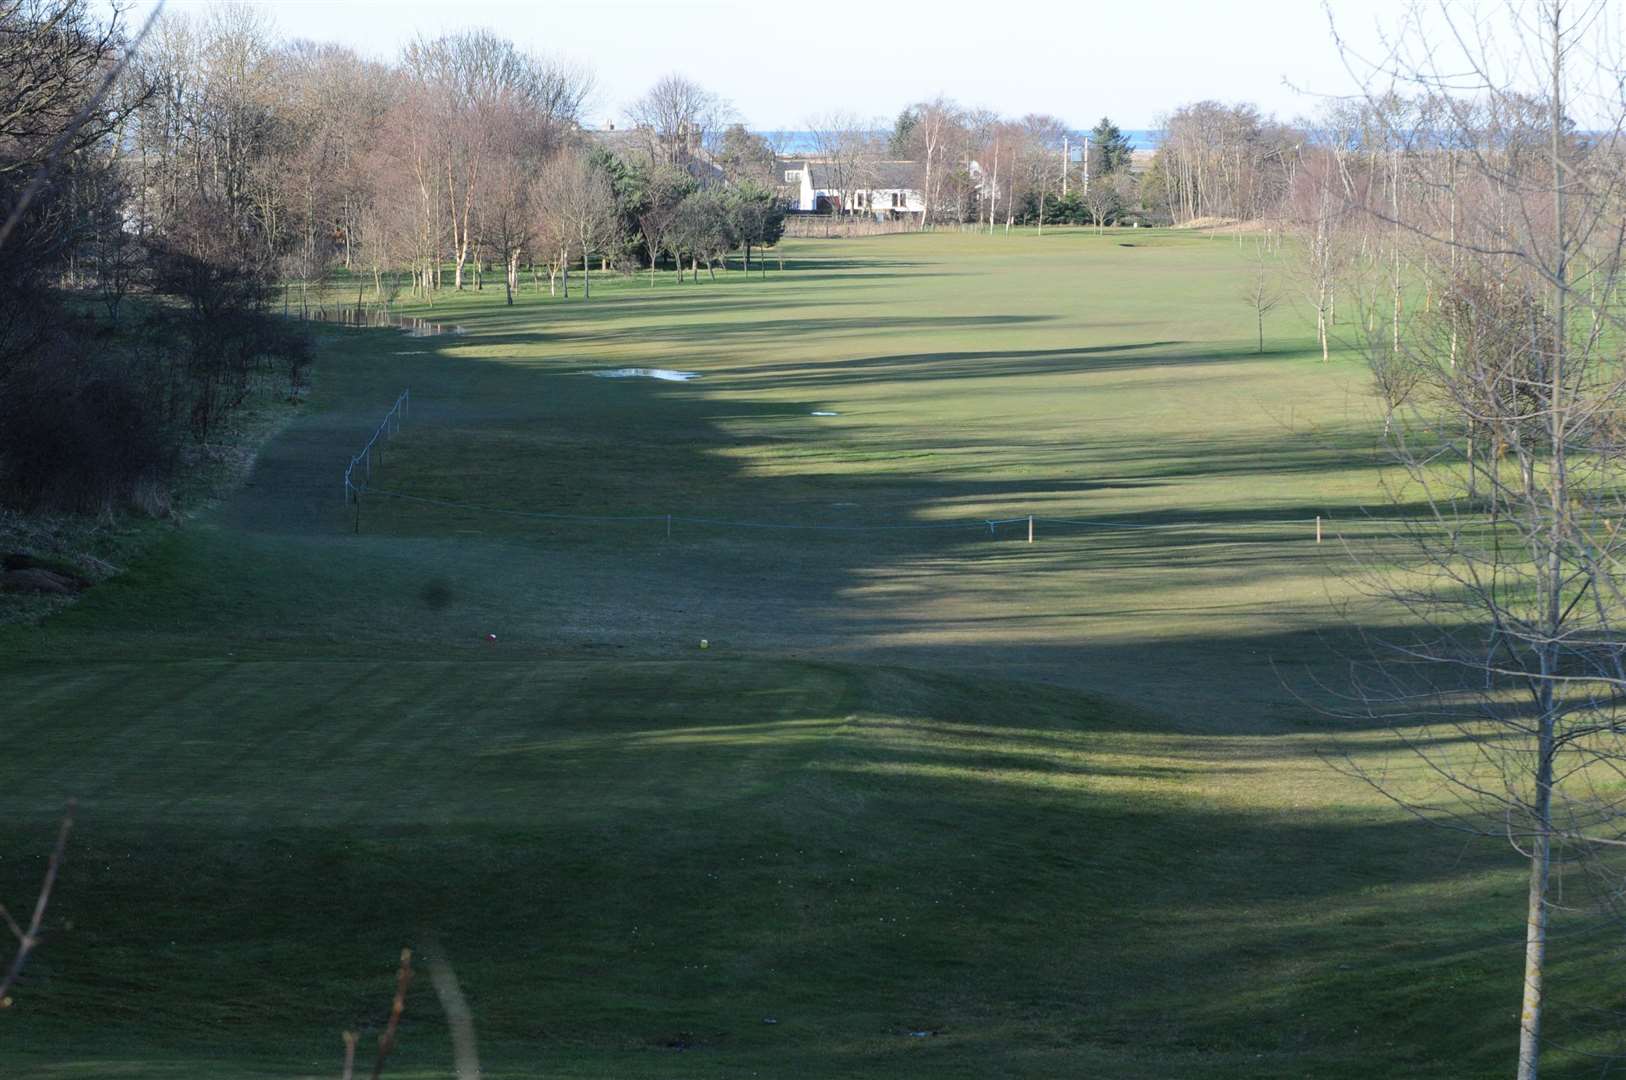 Garmouth & Kingston Golf Club